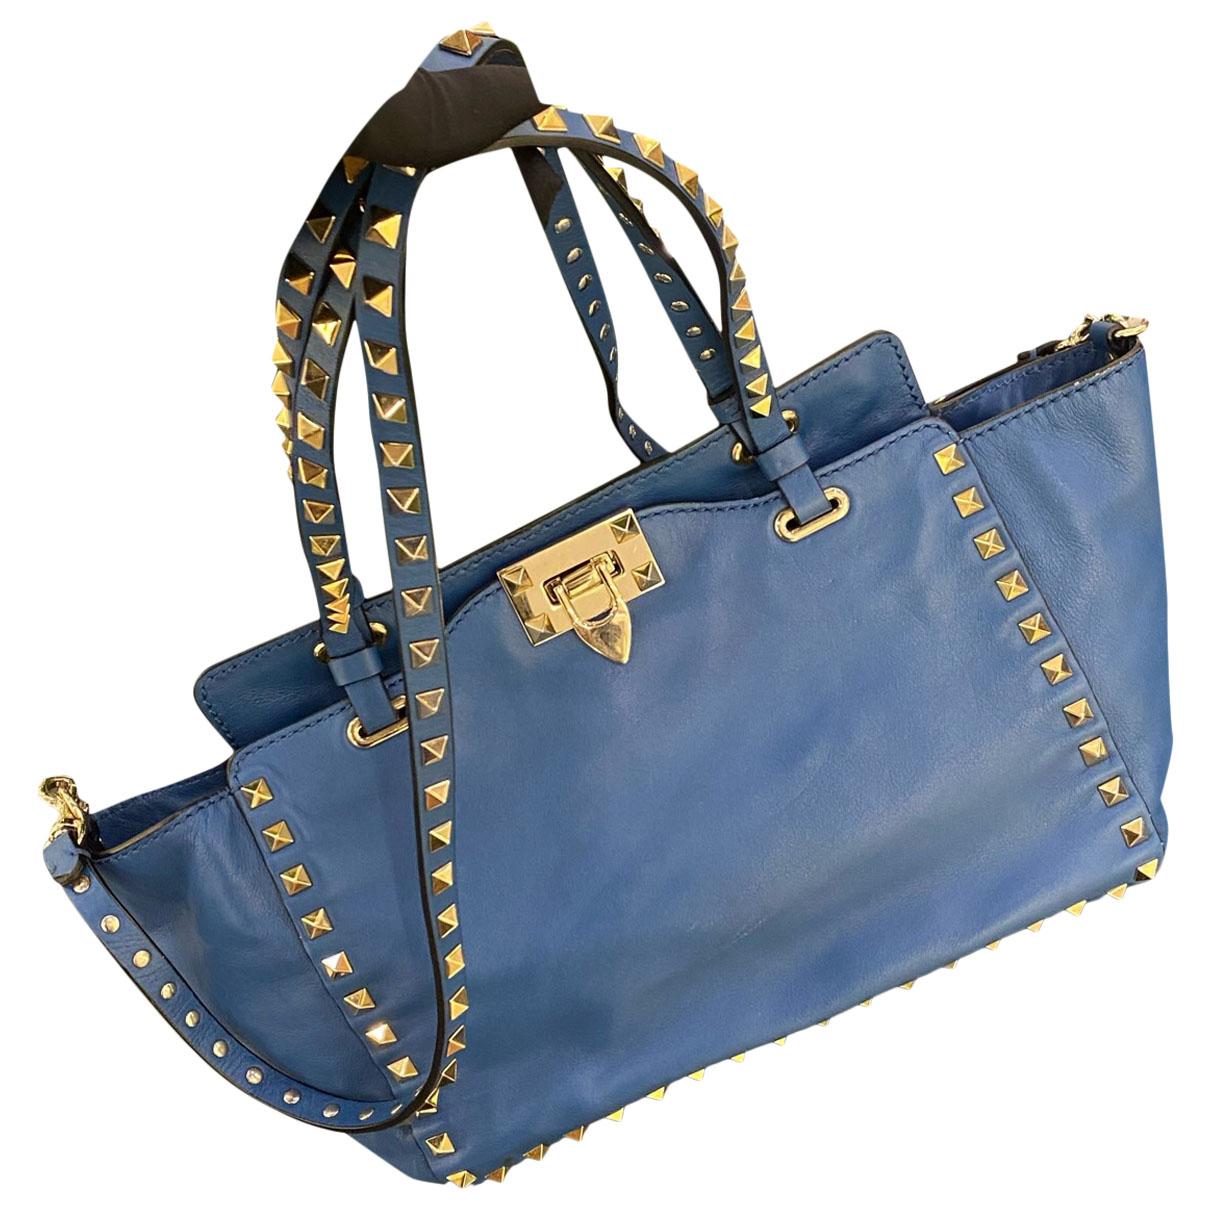 Cross body bags Valentino Garavani - VLOGO bag in light blue -  UW2B0H28RQR56Y